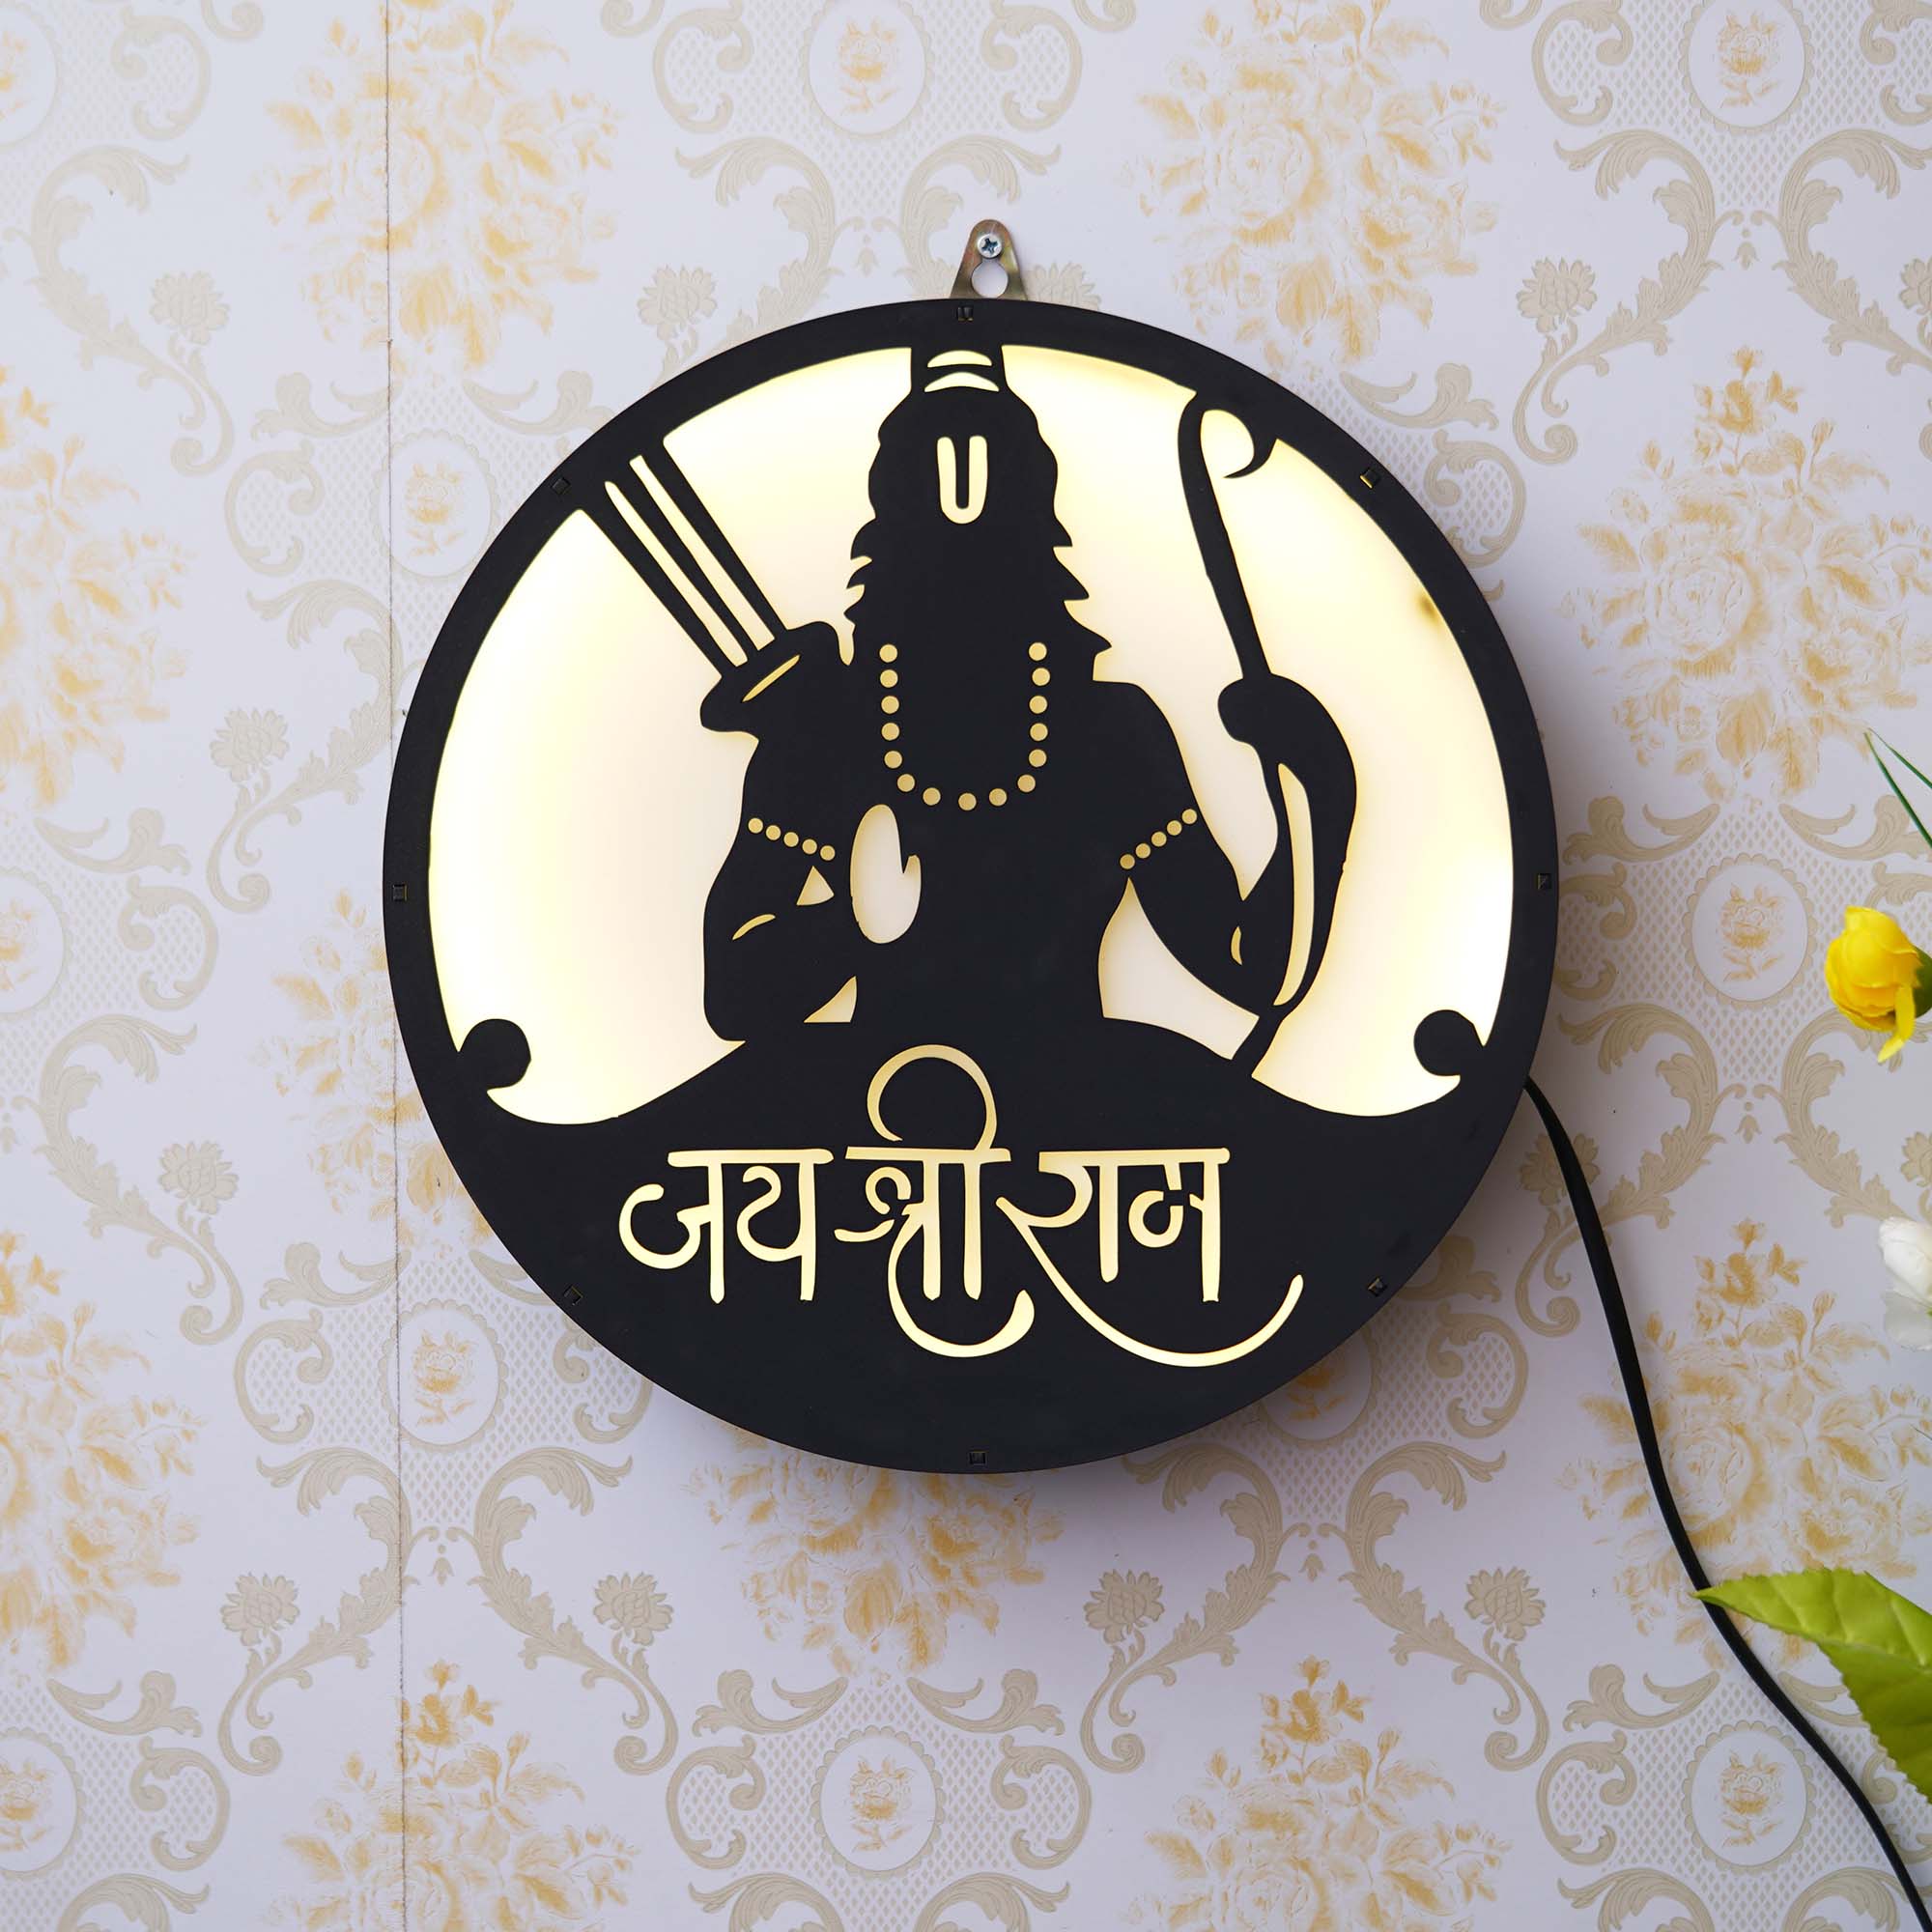 Lord Rama with "Jai Shri Ram" Wooden Cutout LED Light Lamp Wall Hanging